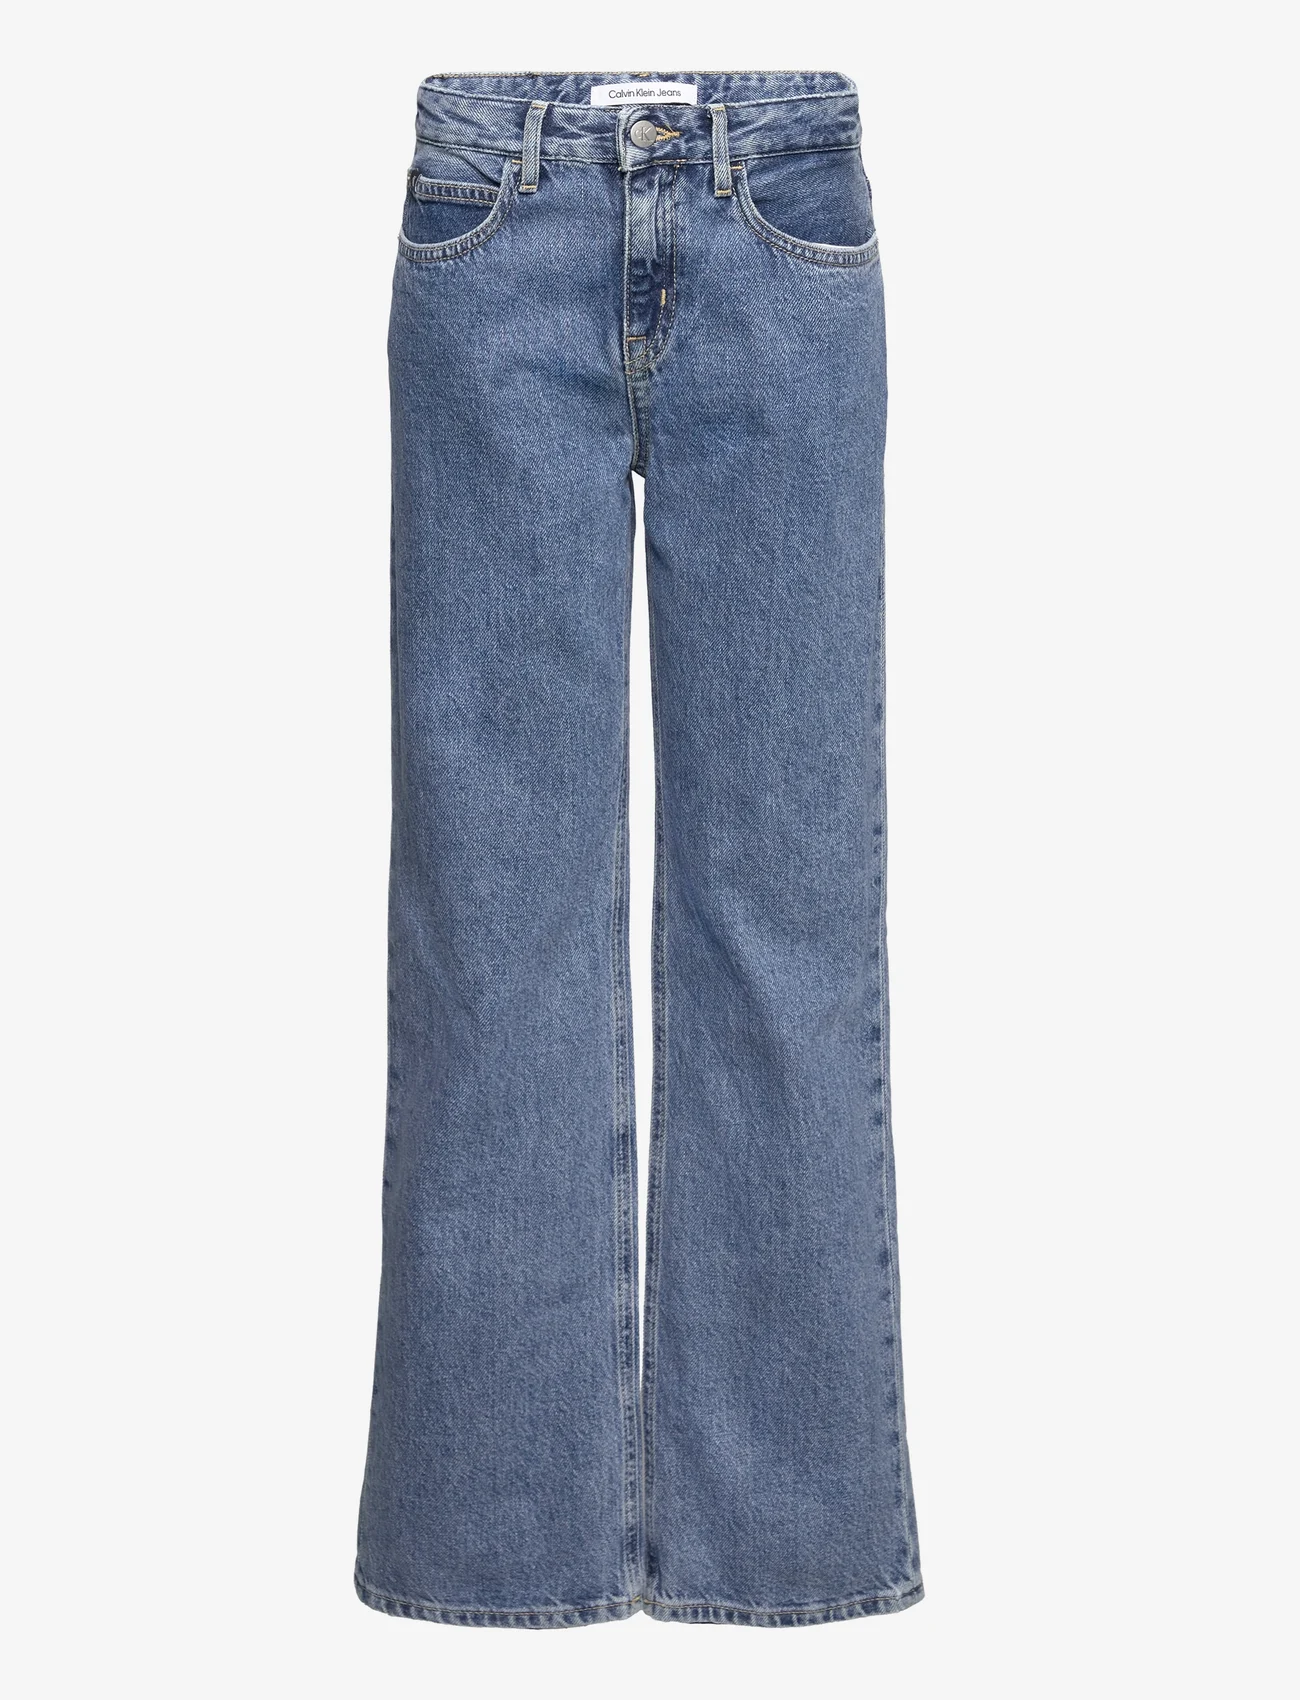 Calvin Klein - HR WIDE LEG MID BLUE RIGID - wide jeans - mid blue rigid - 0